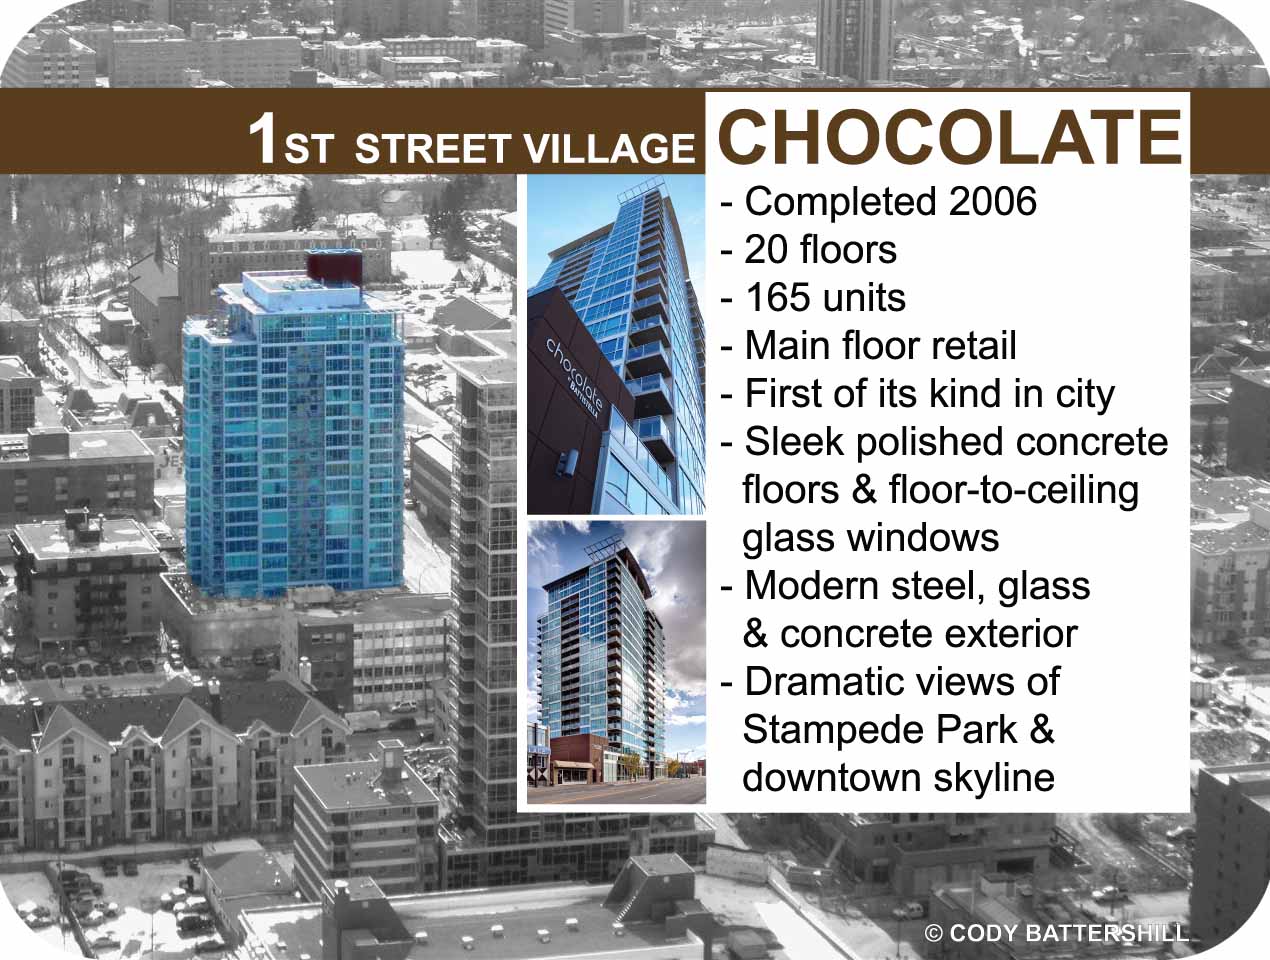 Chocolate condos first street village - infographic